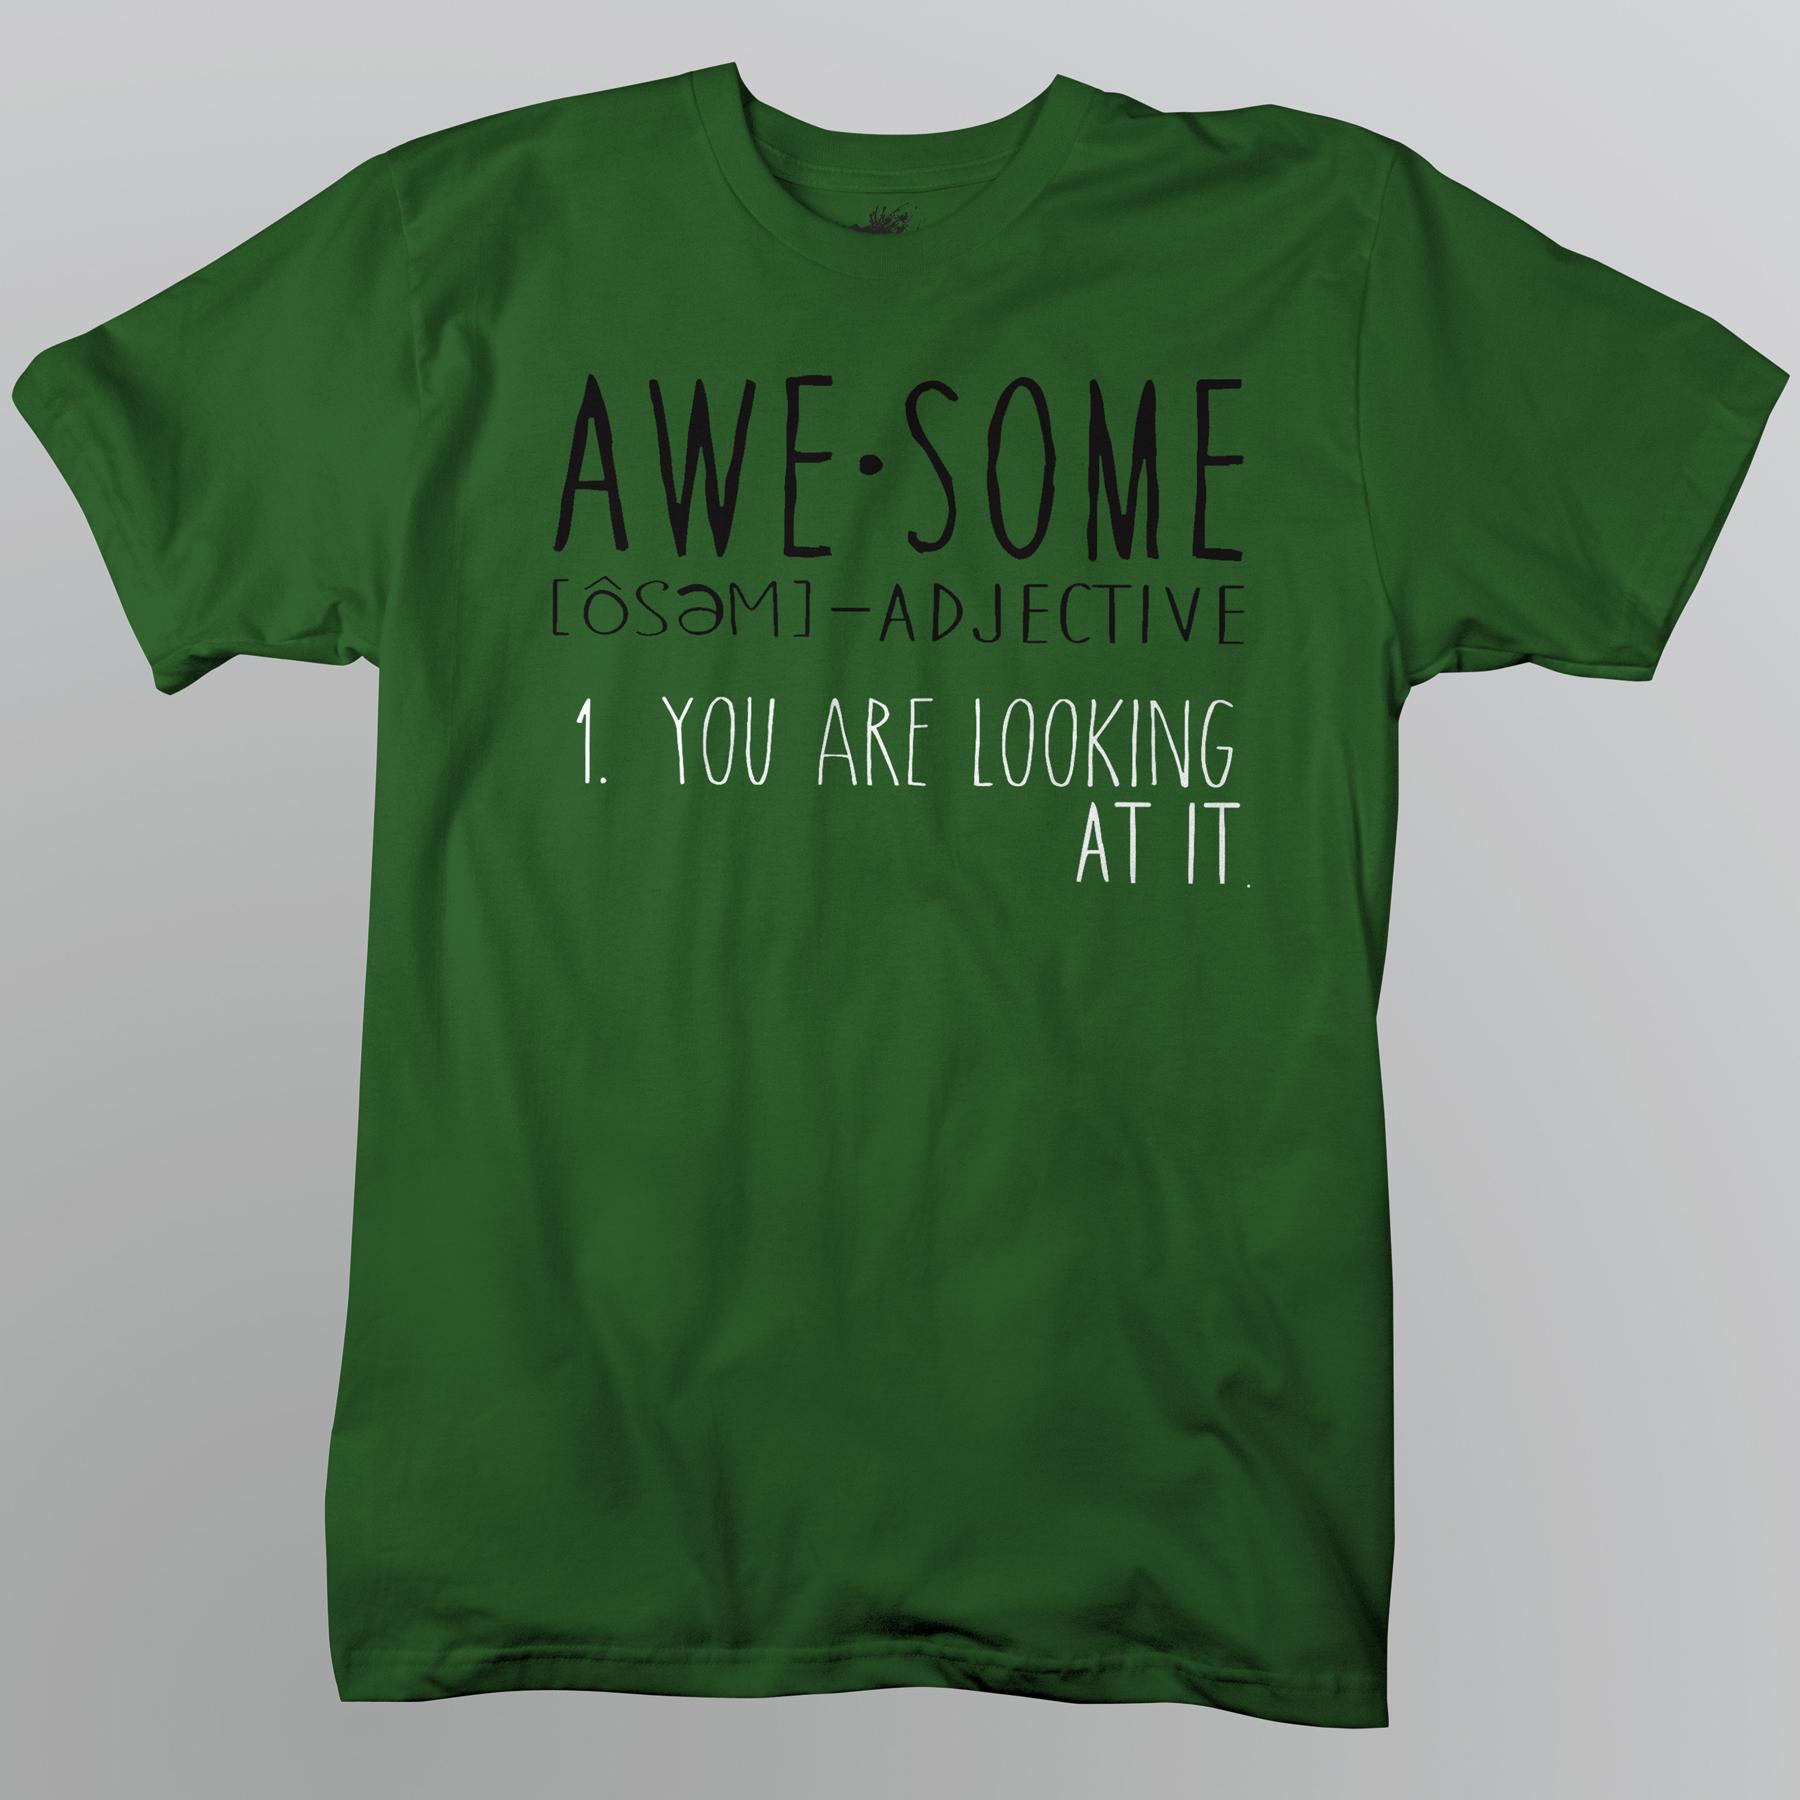 Bravado Men's Graphic T-Shirt - Awesome